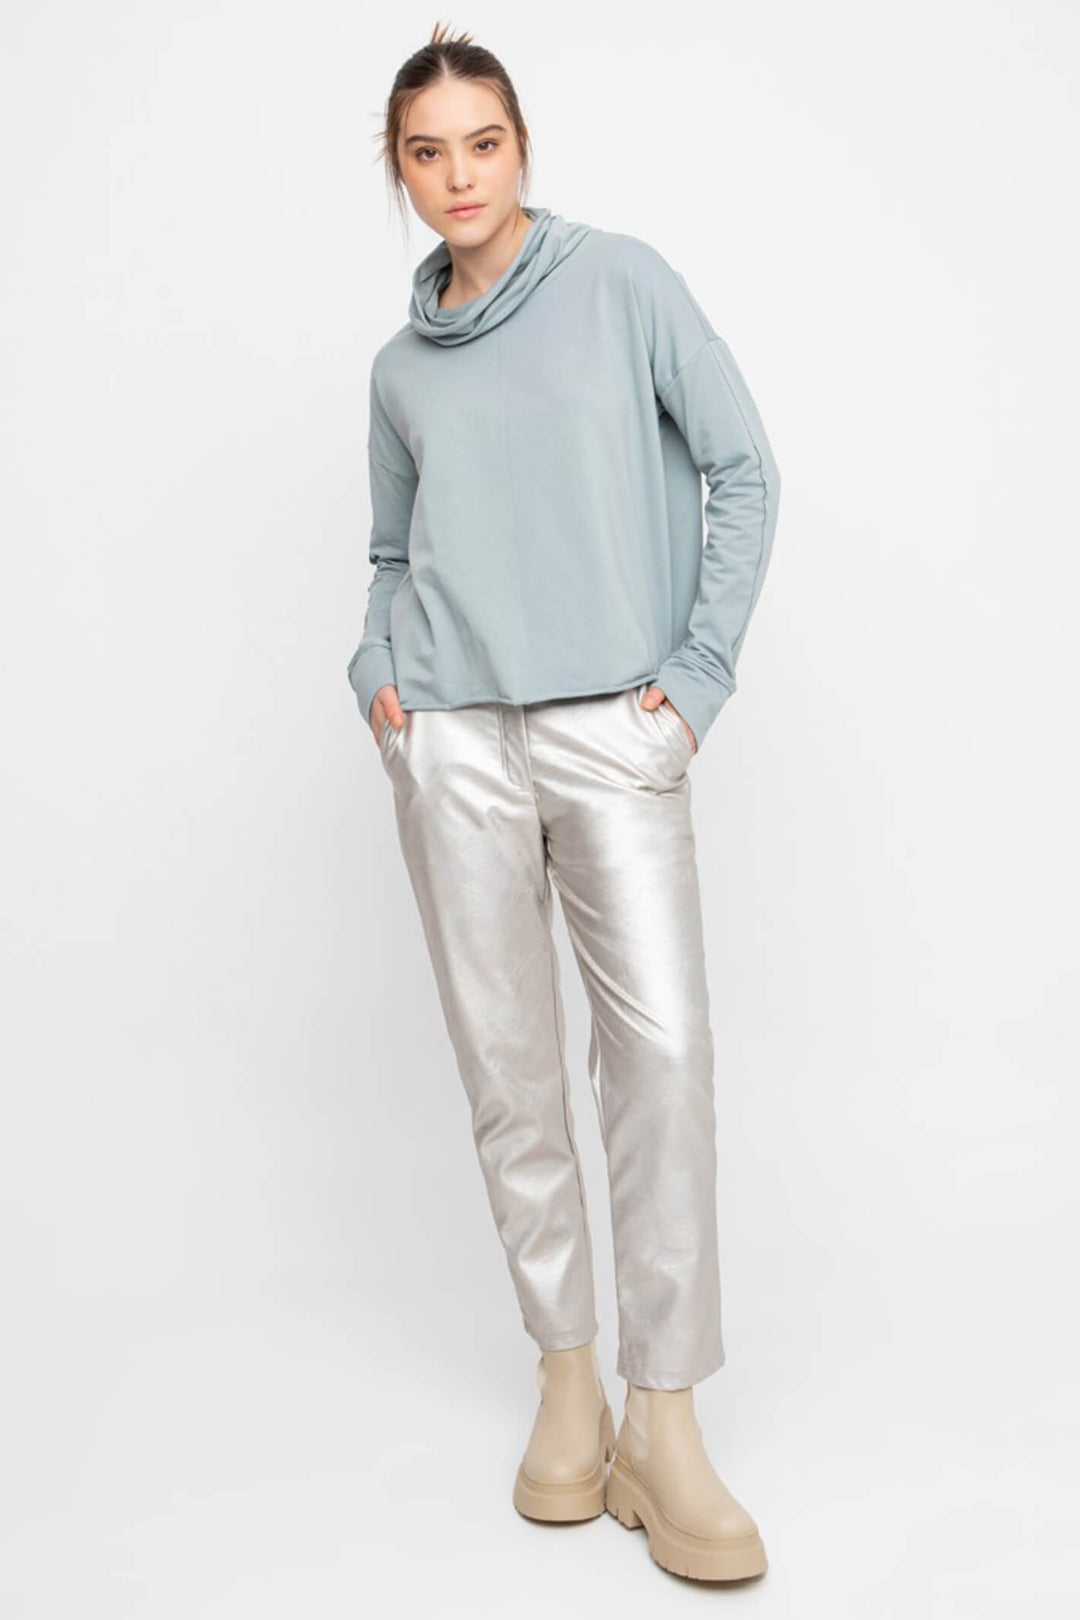 Ozai N Ku 744 103 Metallic Silver Gloss Faux Leather Trousers